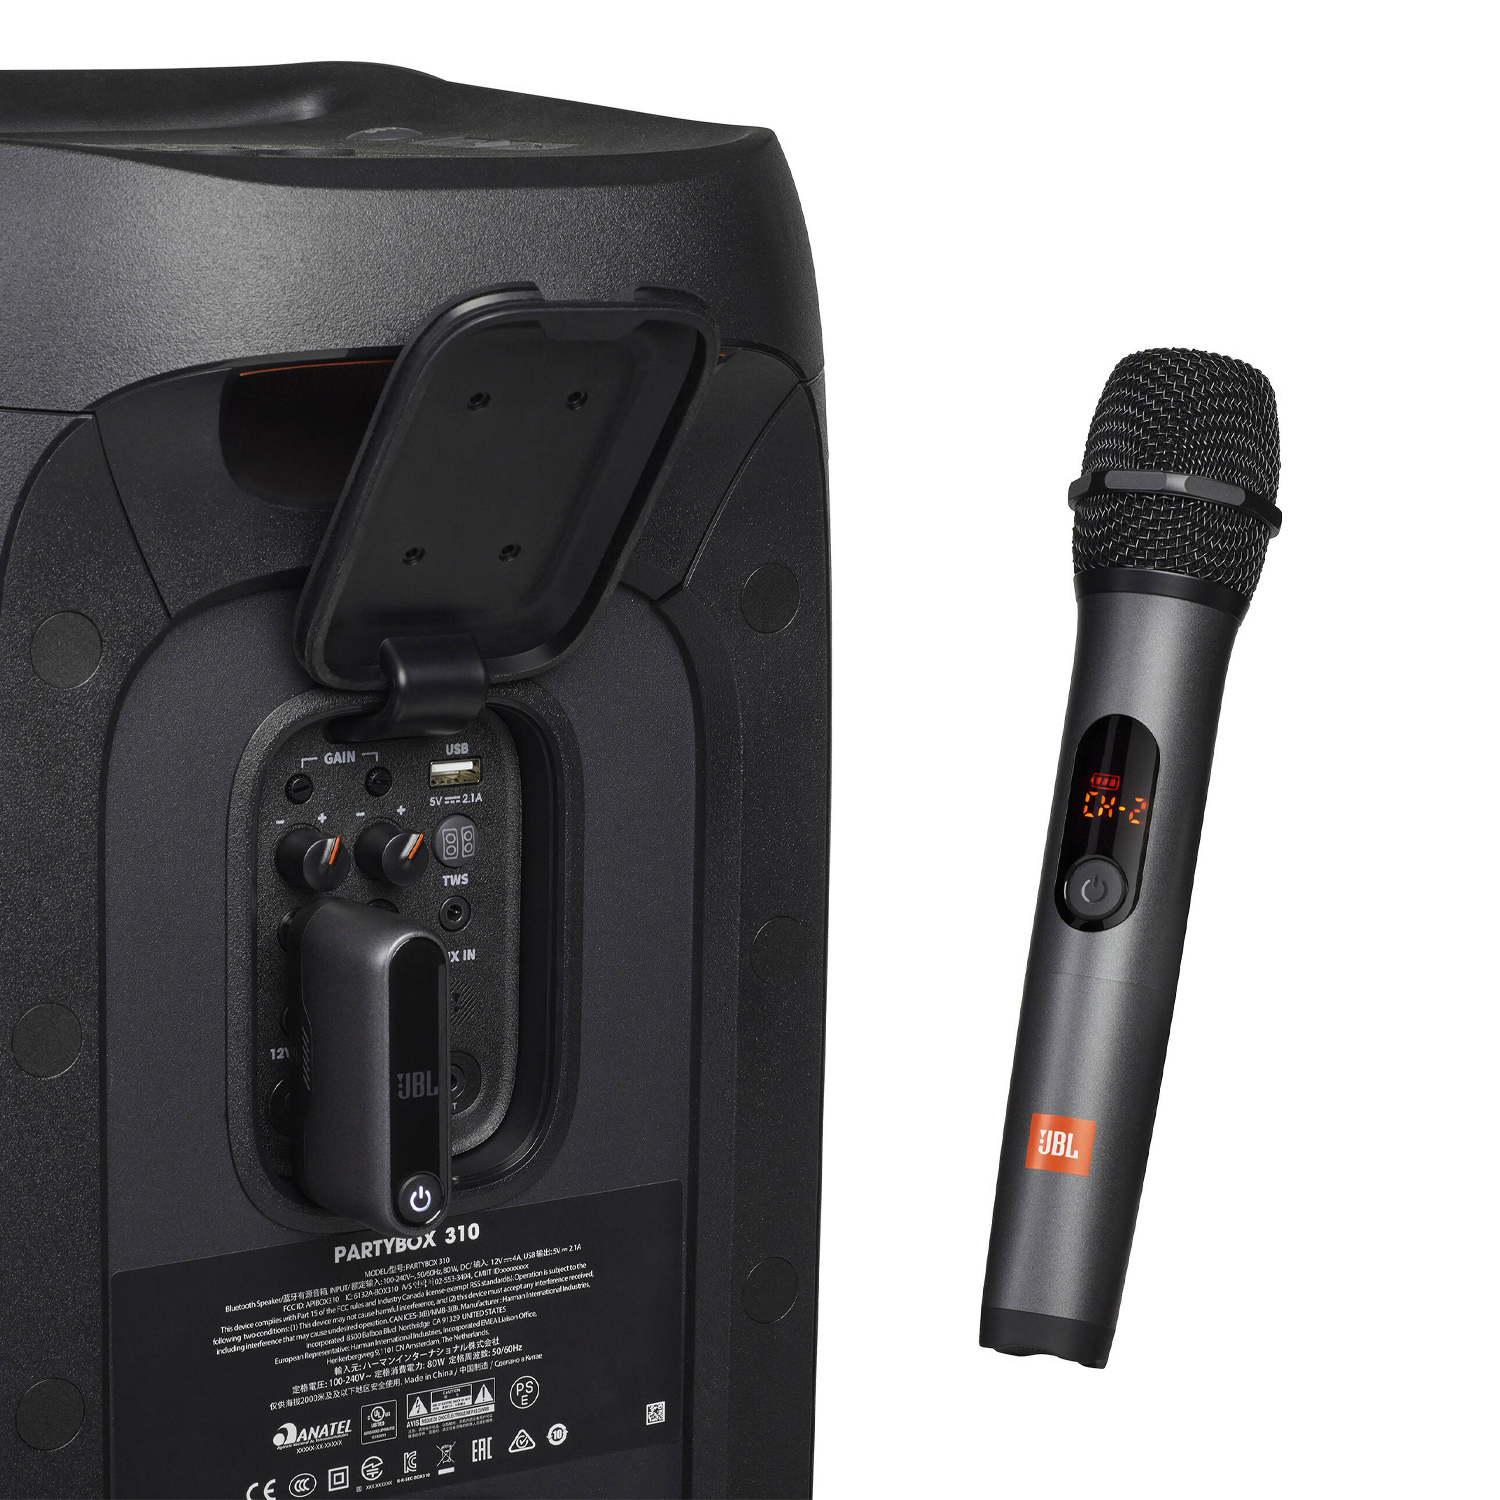 Microfone JBL Wireless Microphone Set - Preto